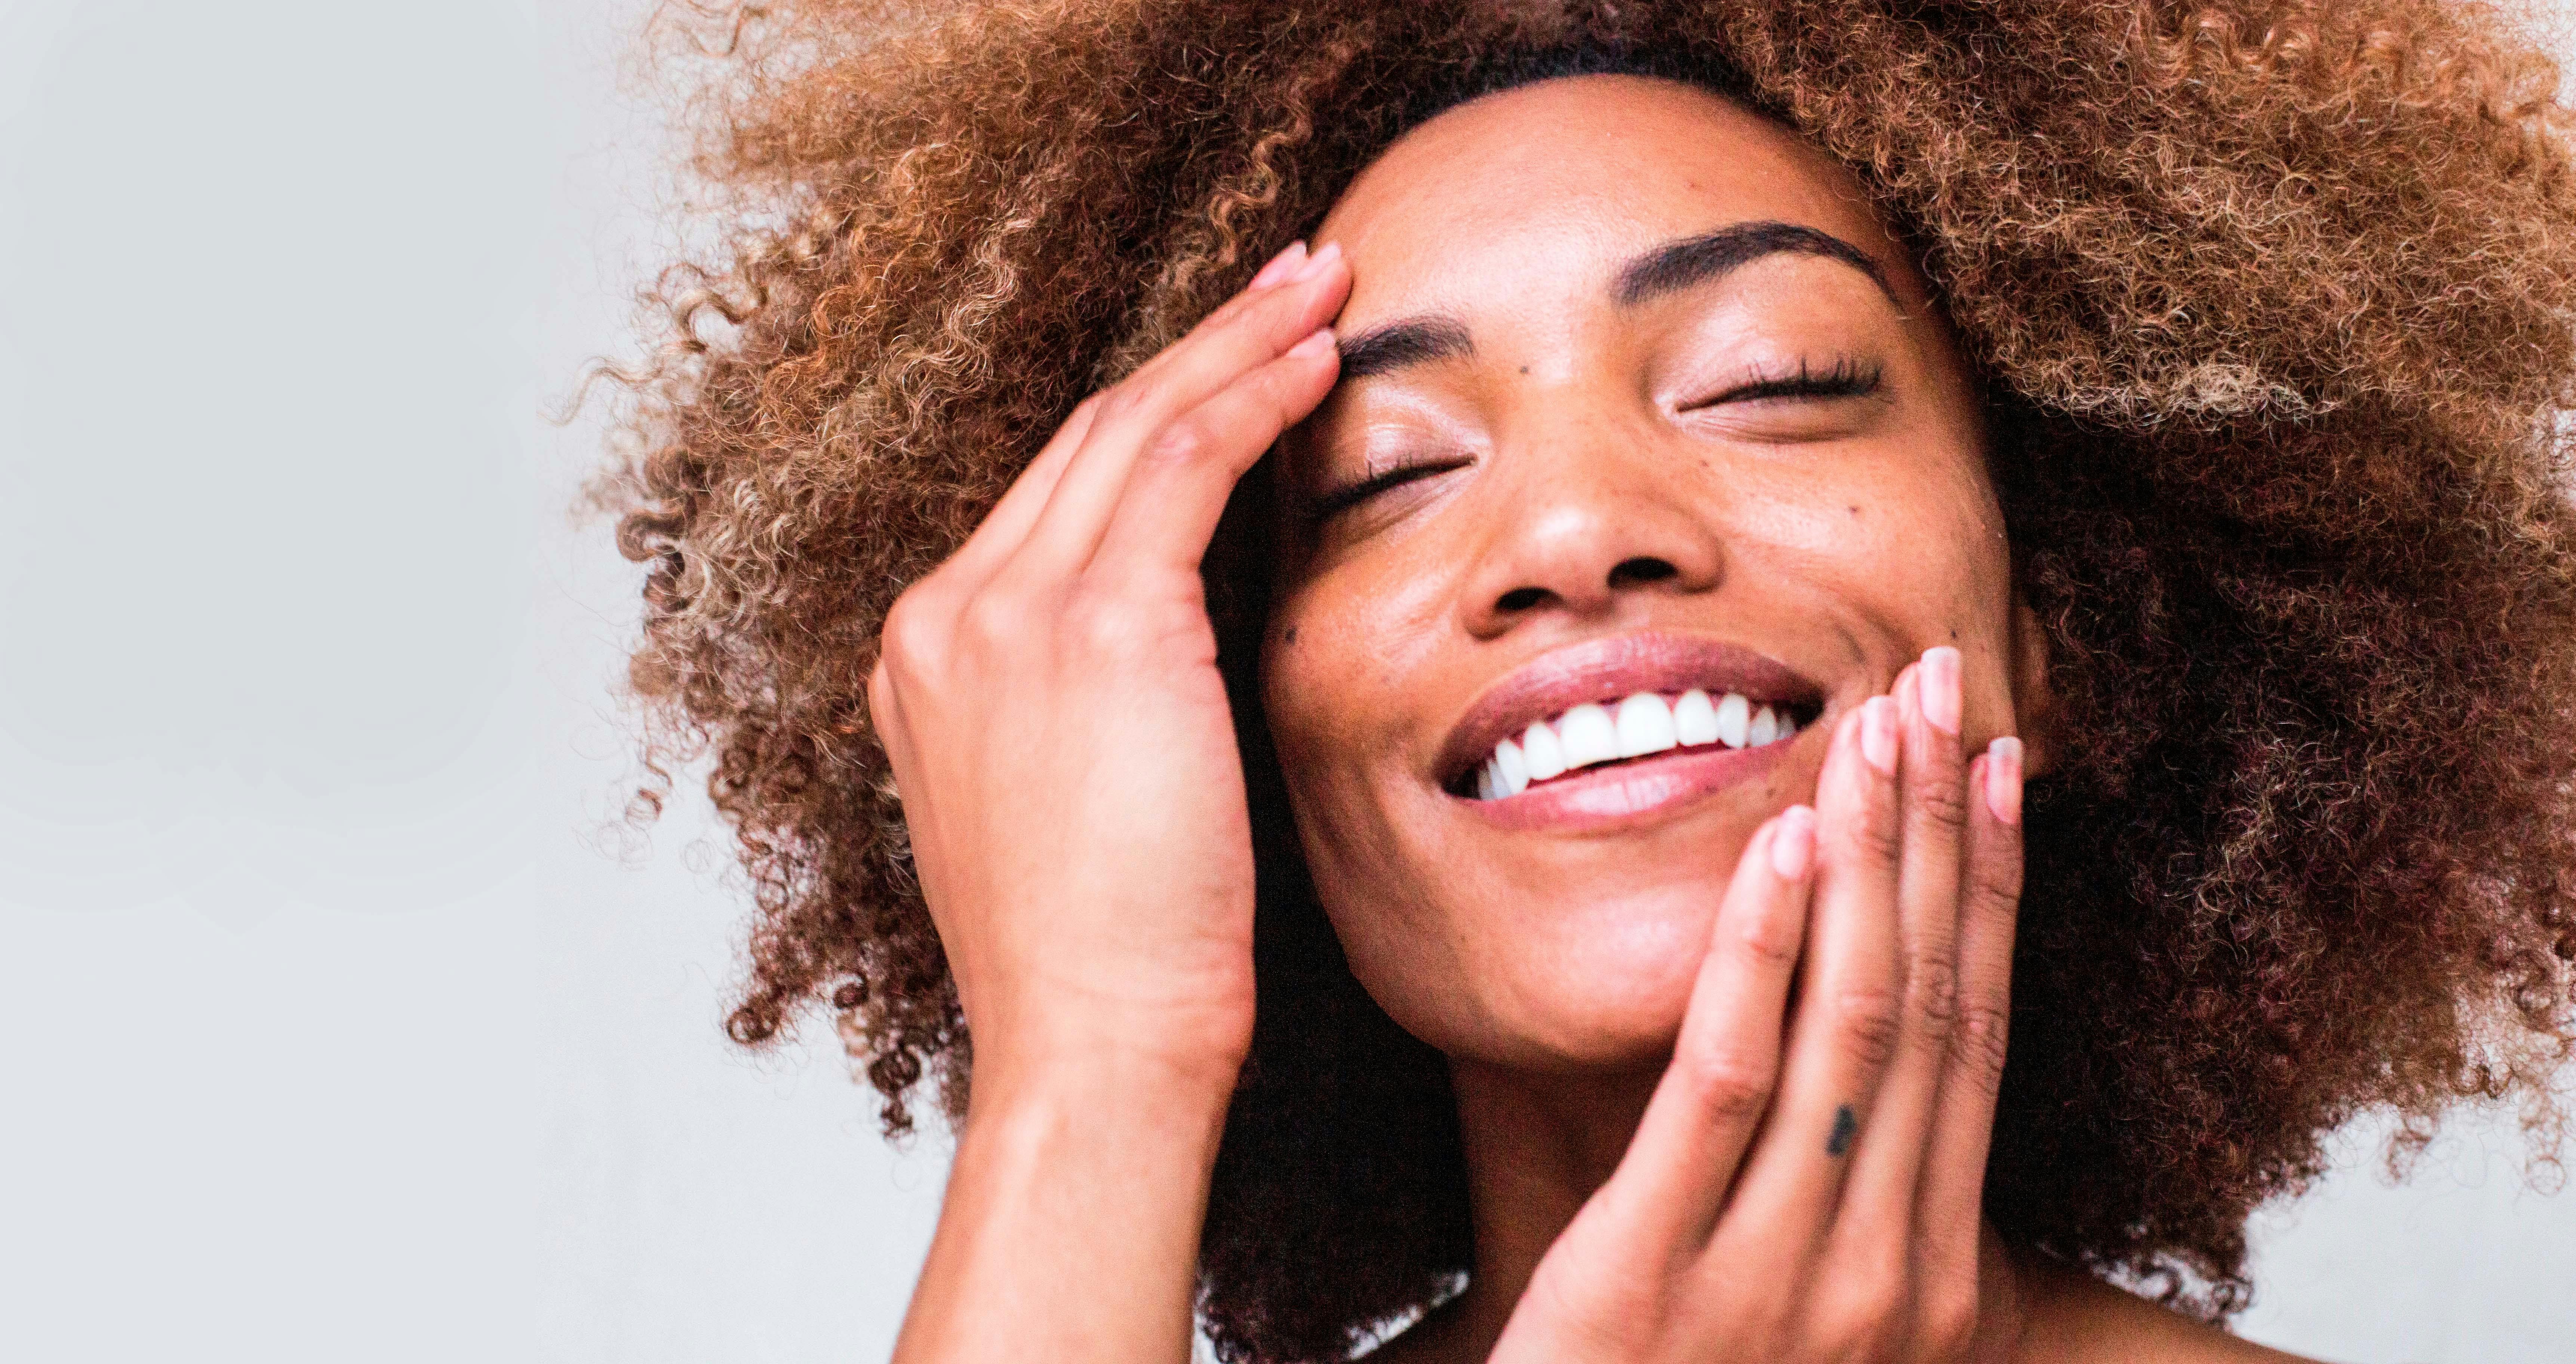 9 råd til, hvordan du omfavner og passer på din naturlige hud